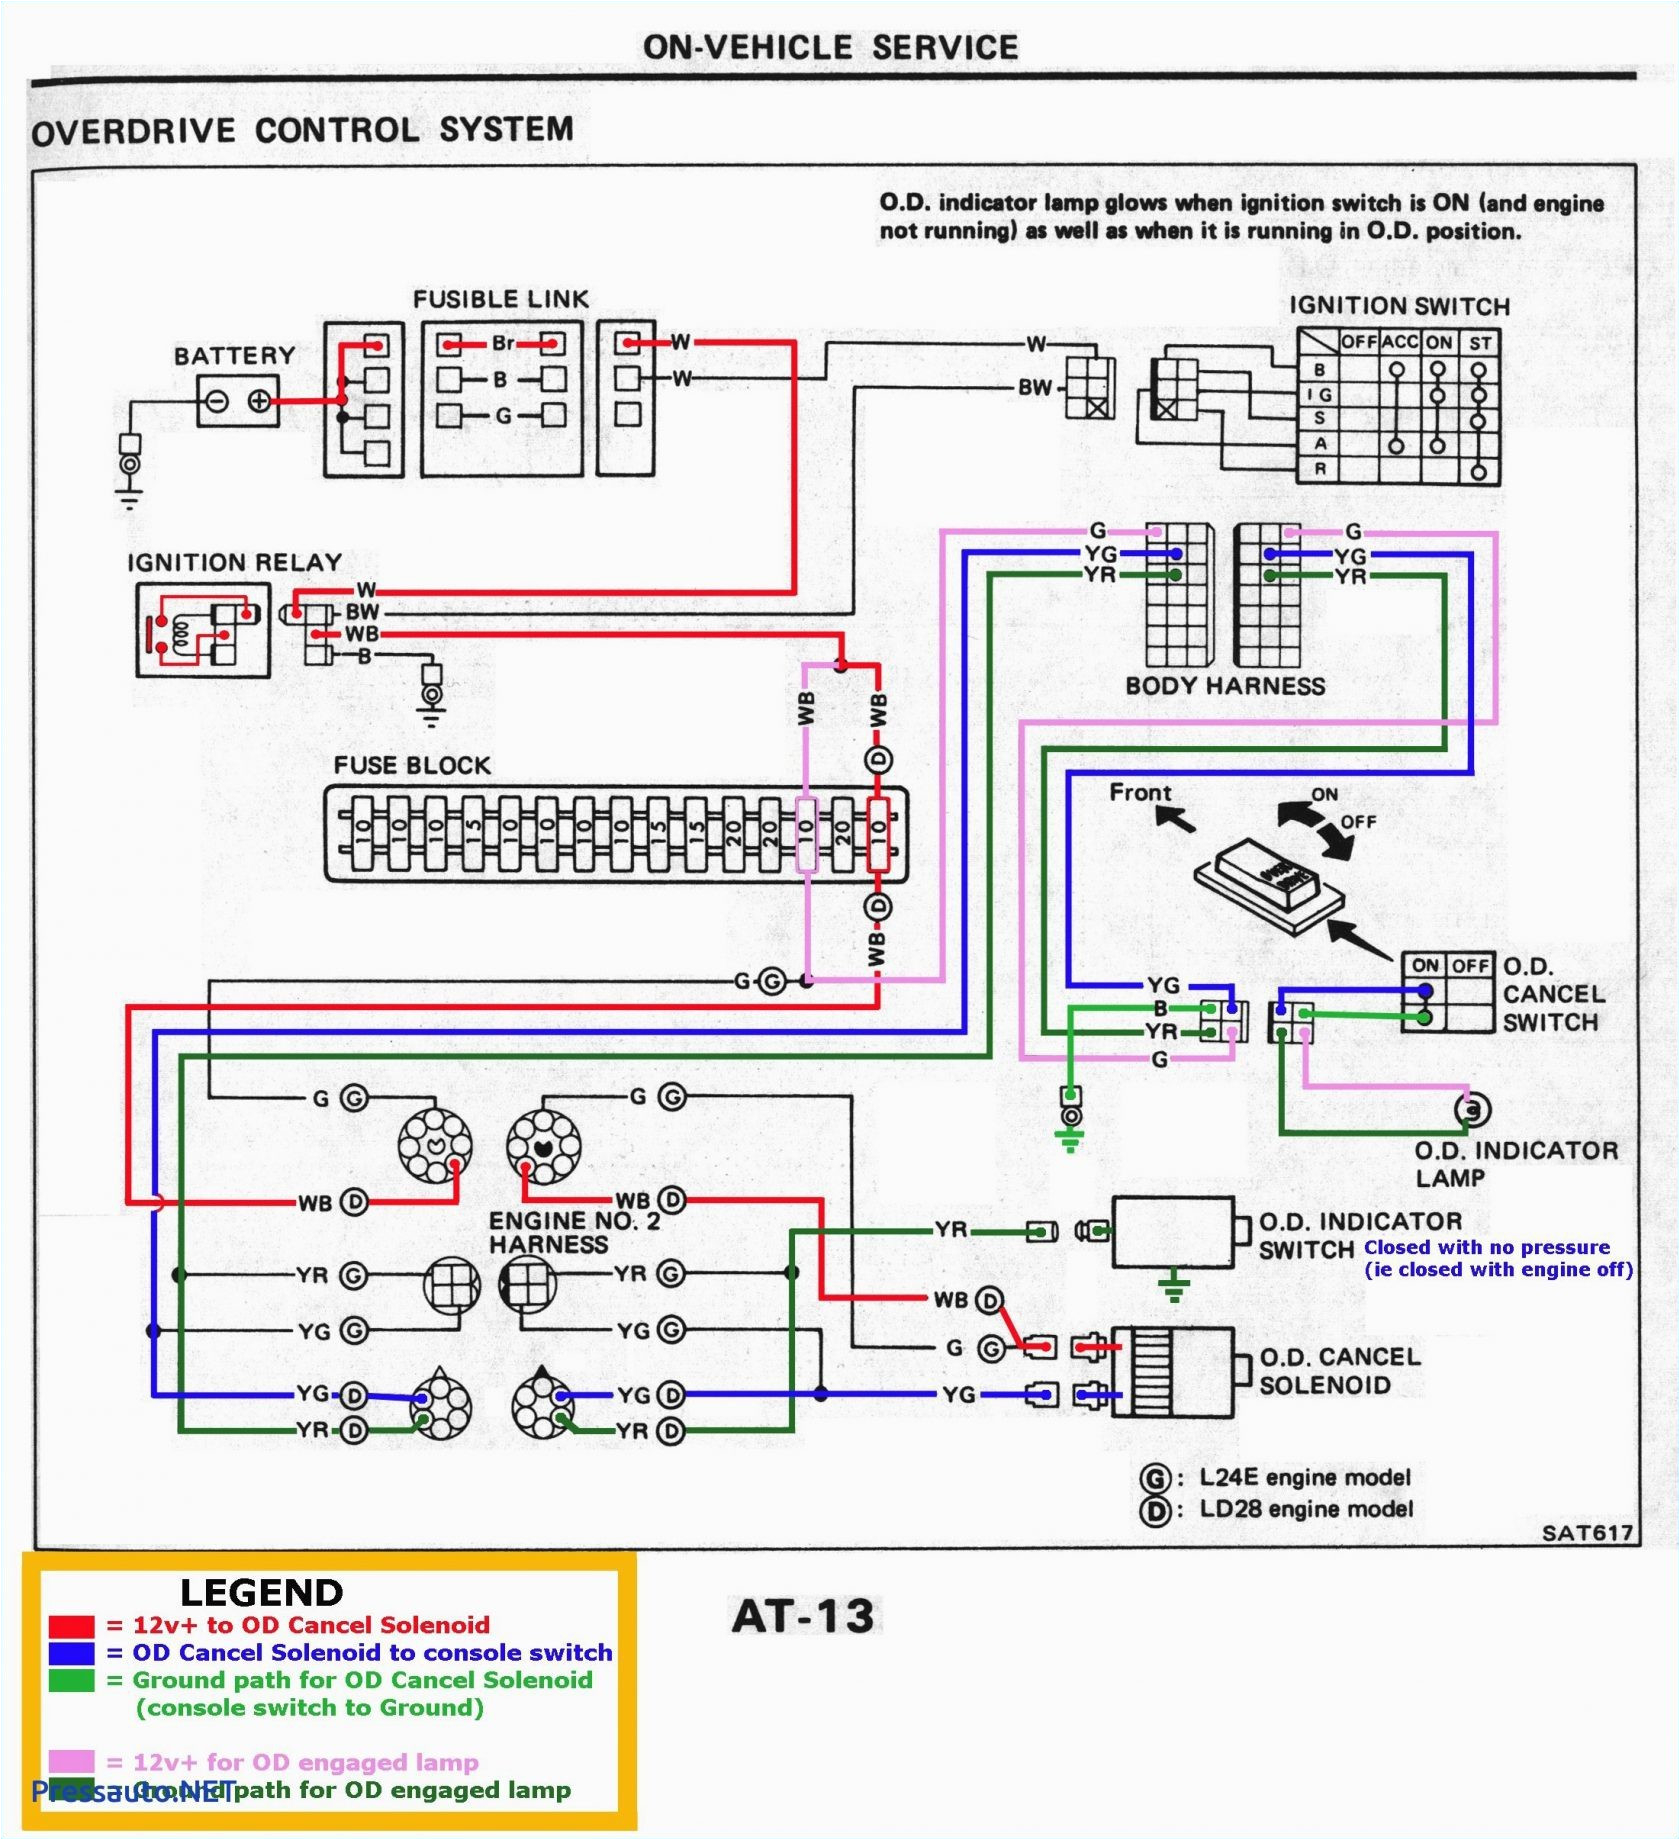 polaris rzr 1000 wiring diagram wiring diagram split polaris rzr wiring diagram polaris rzr wiring diagram source polaris rzr ignition switch